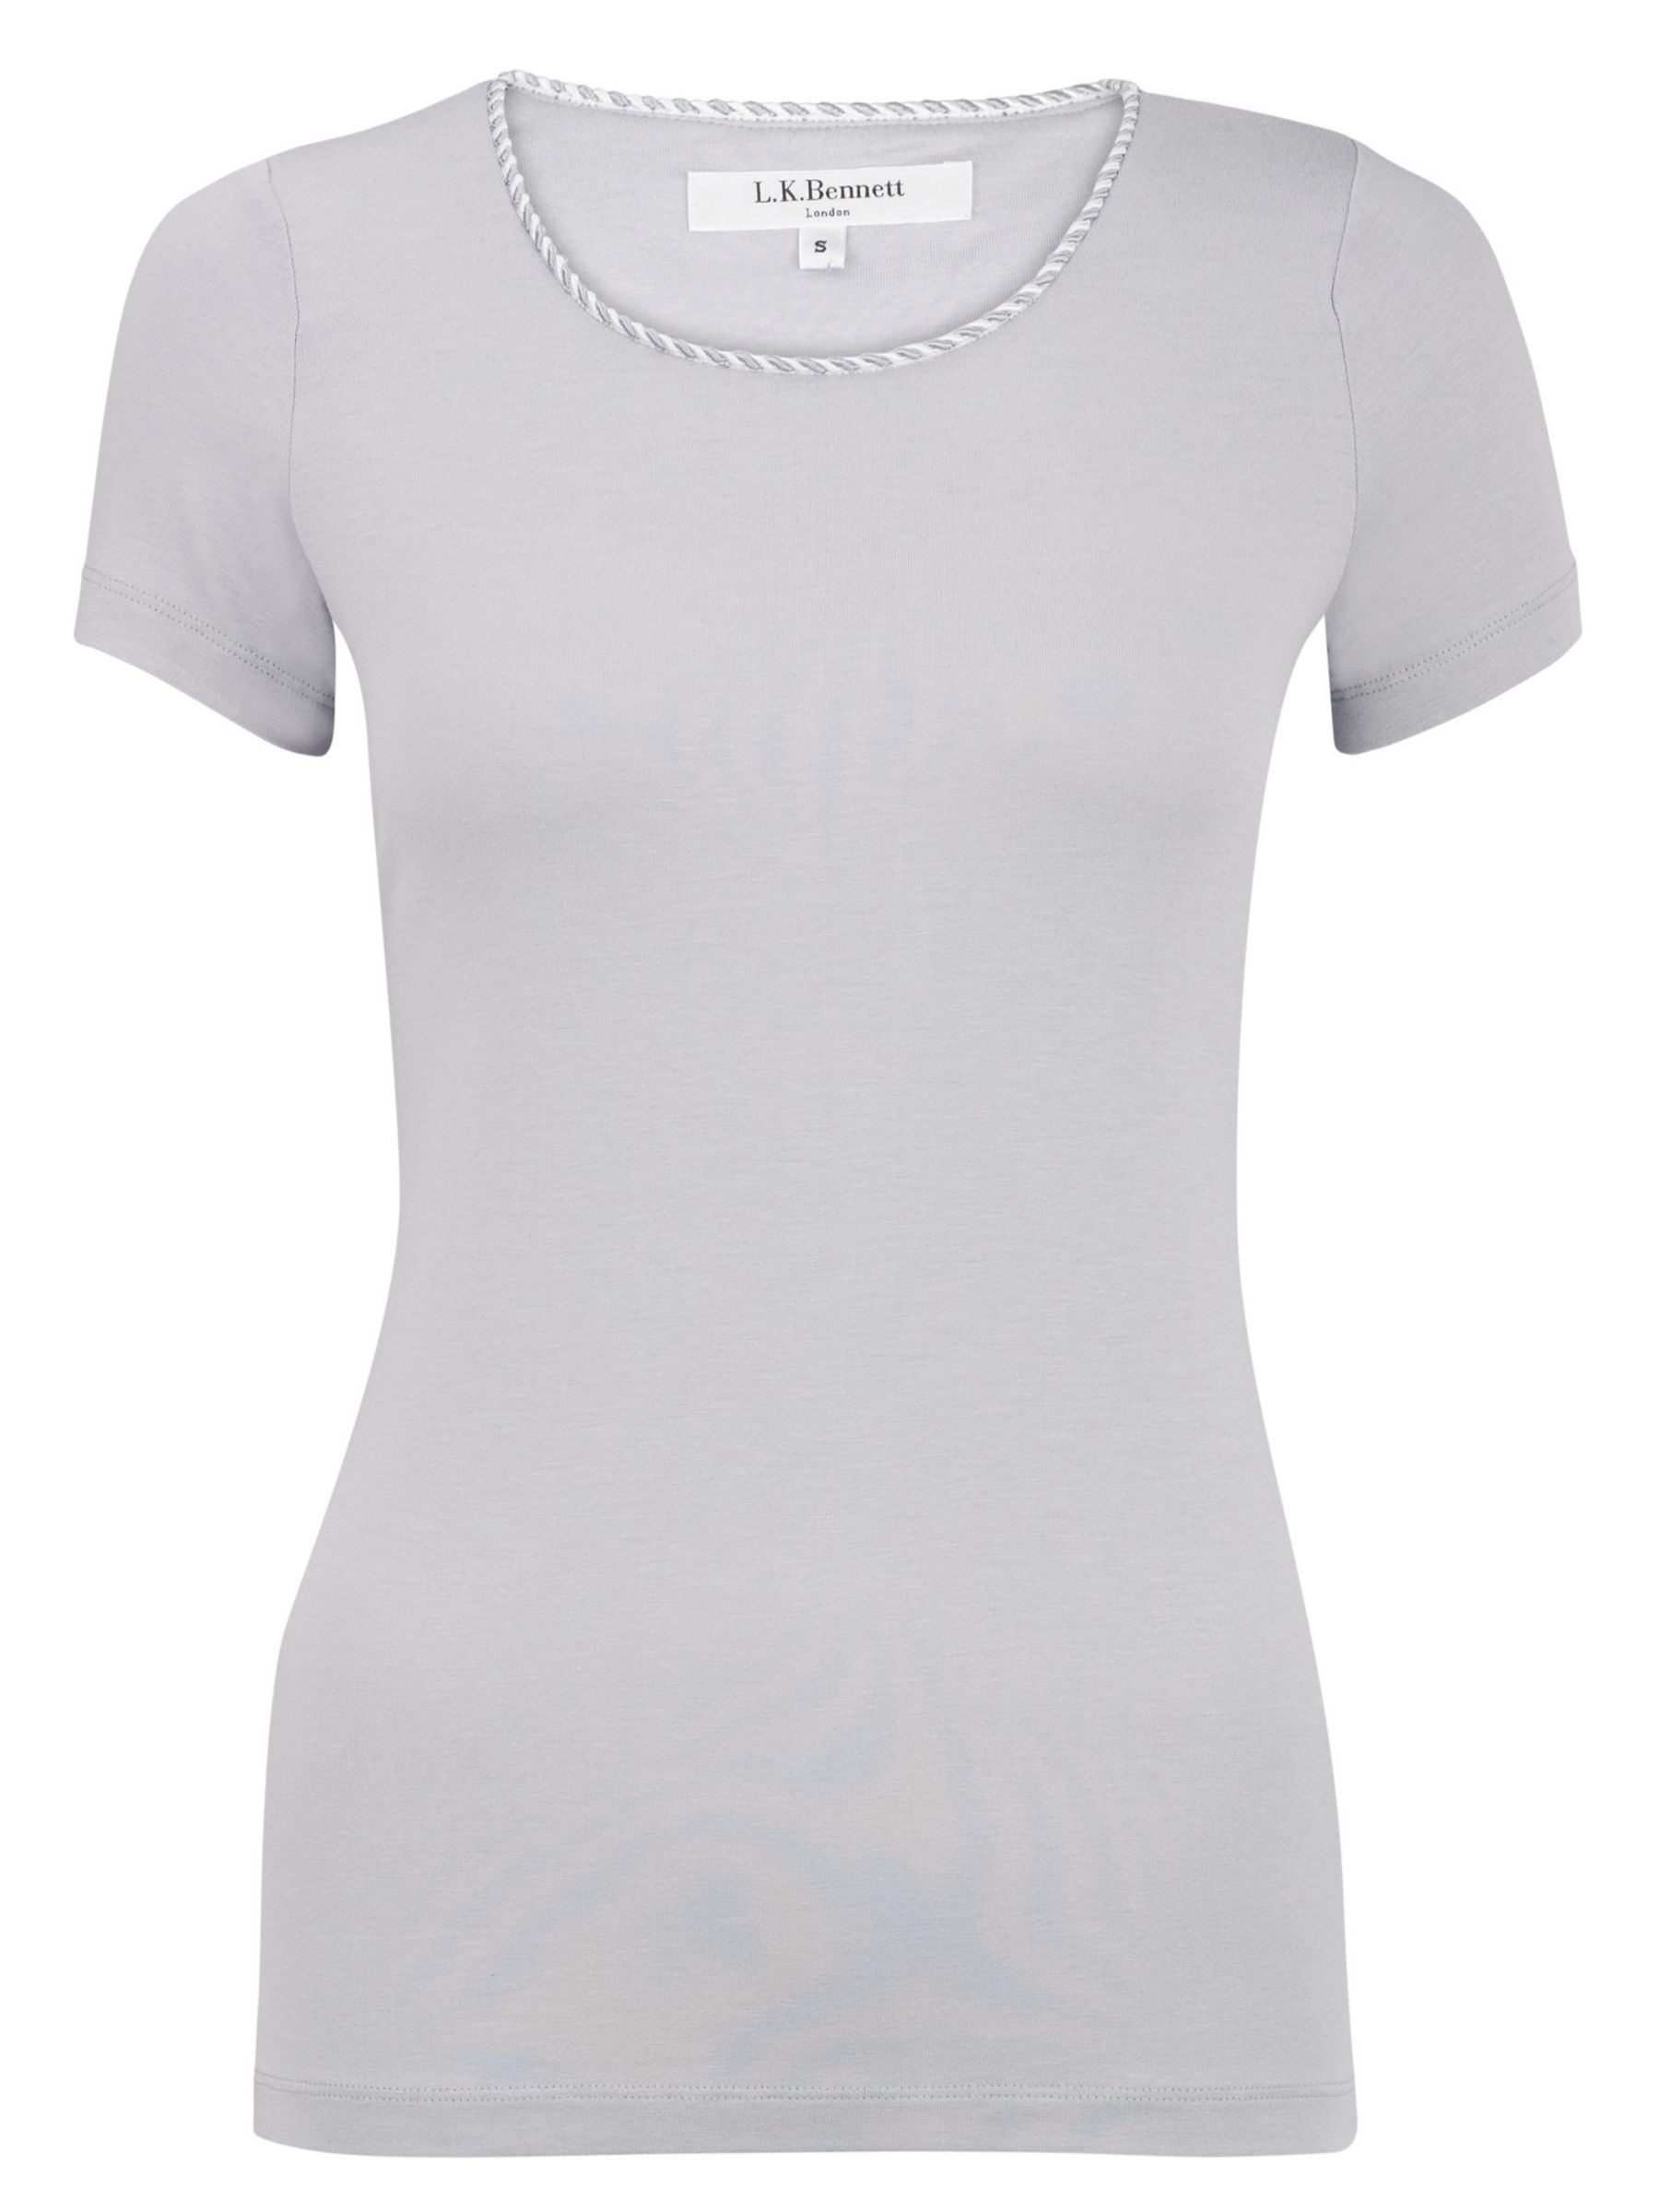 L.K.Bennett Cordy T-Shirt, Silver